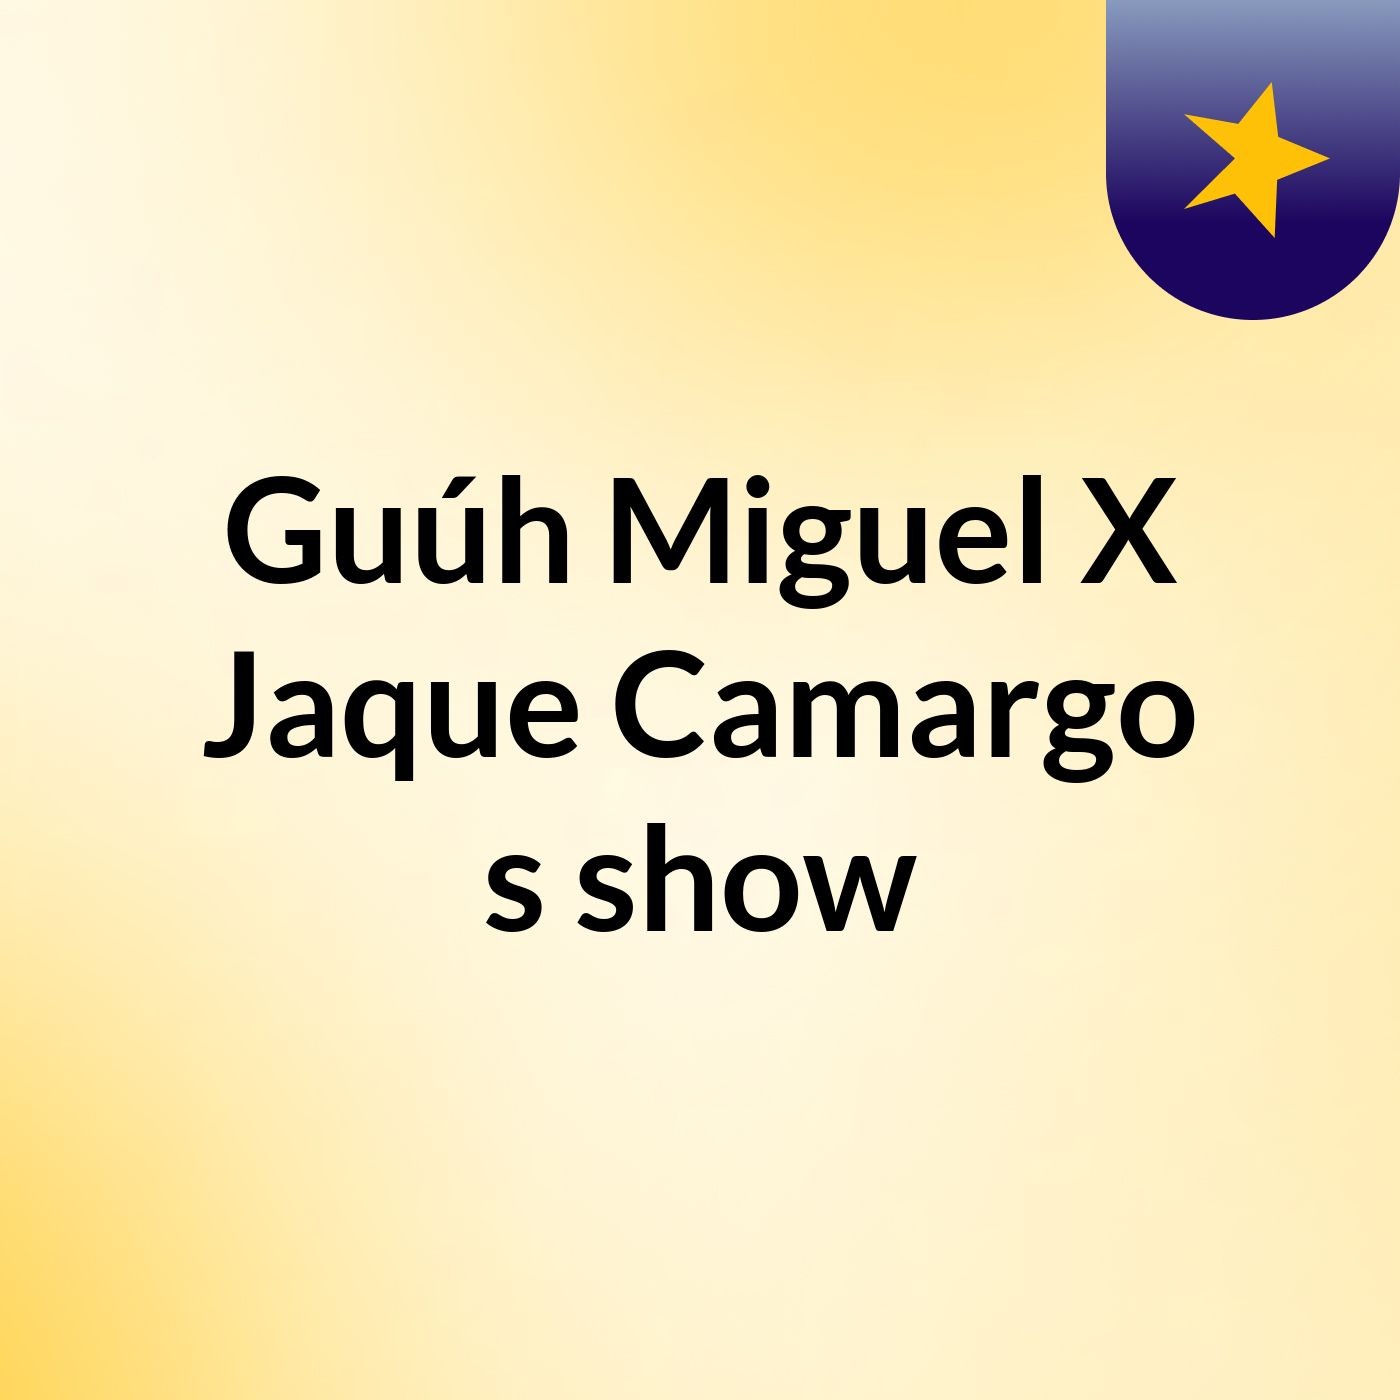 Guúh Miguel X Jaque Camargo's show